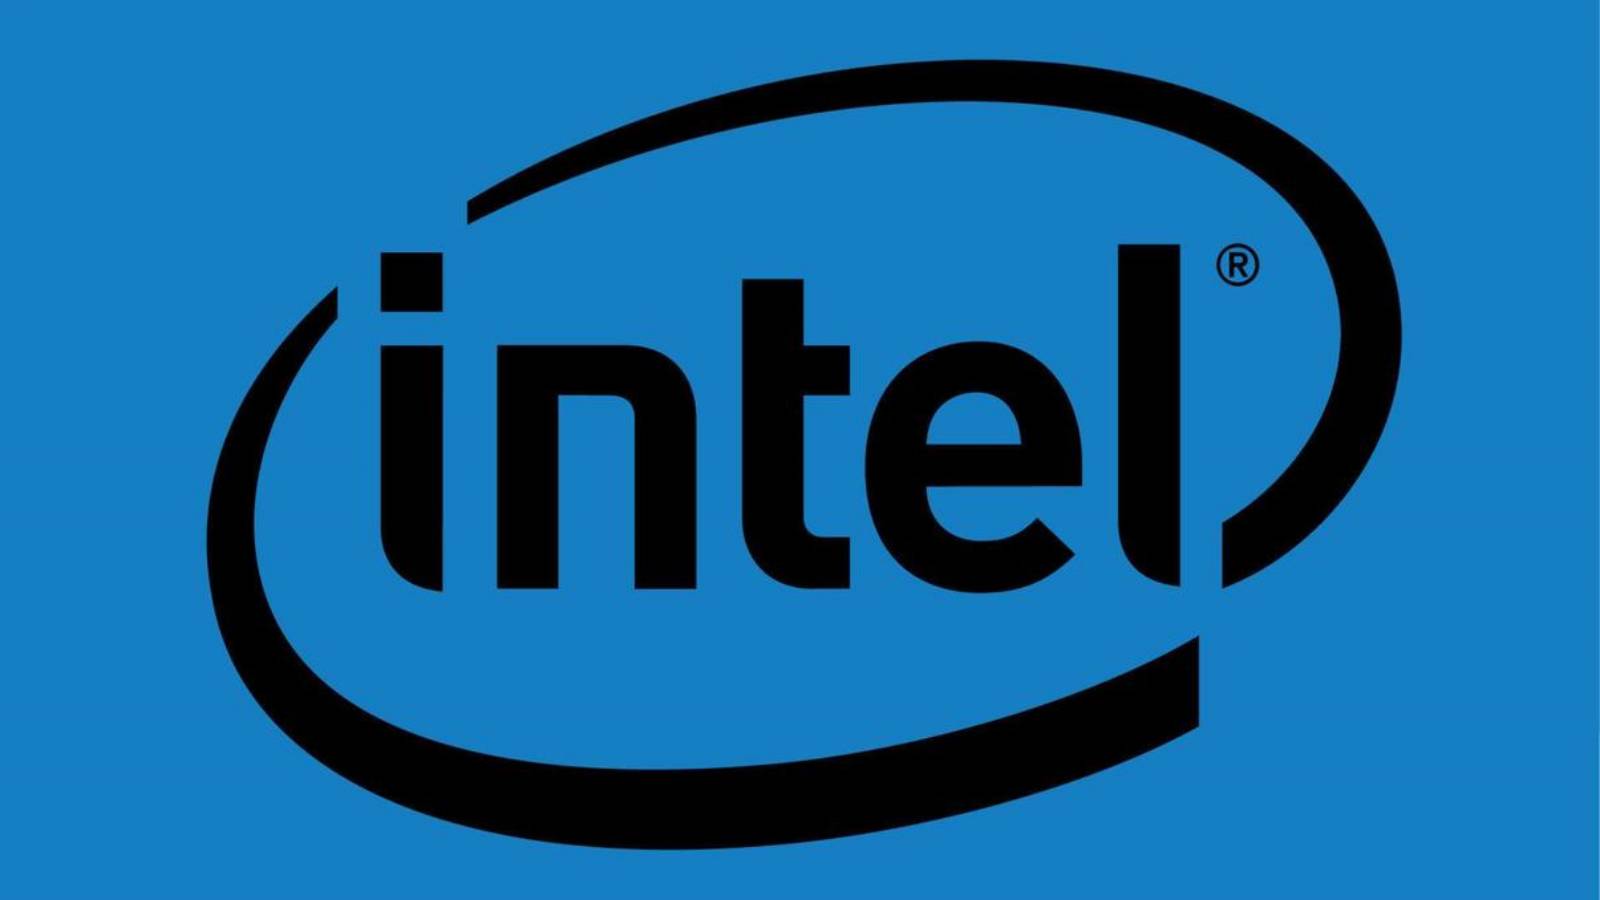 Huawei Intel bat AMD grâce à l'administration Joe Biden